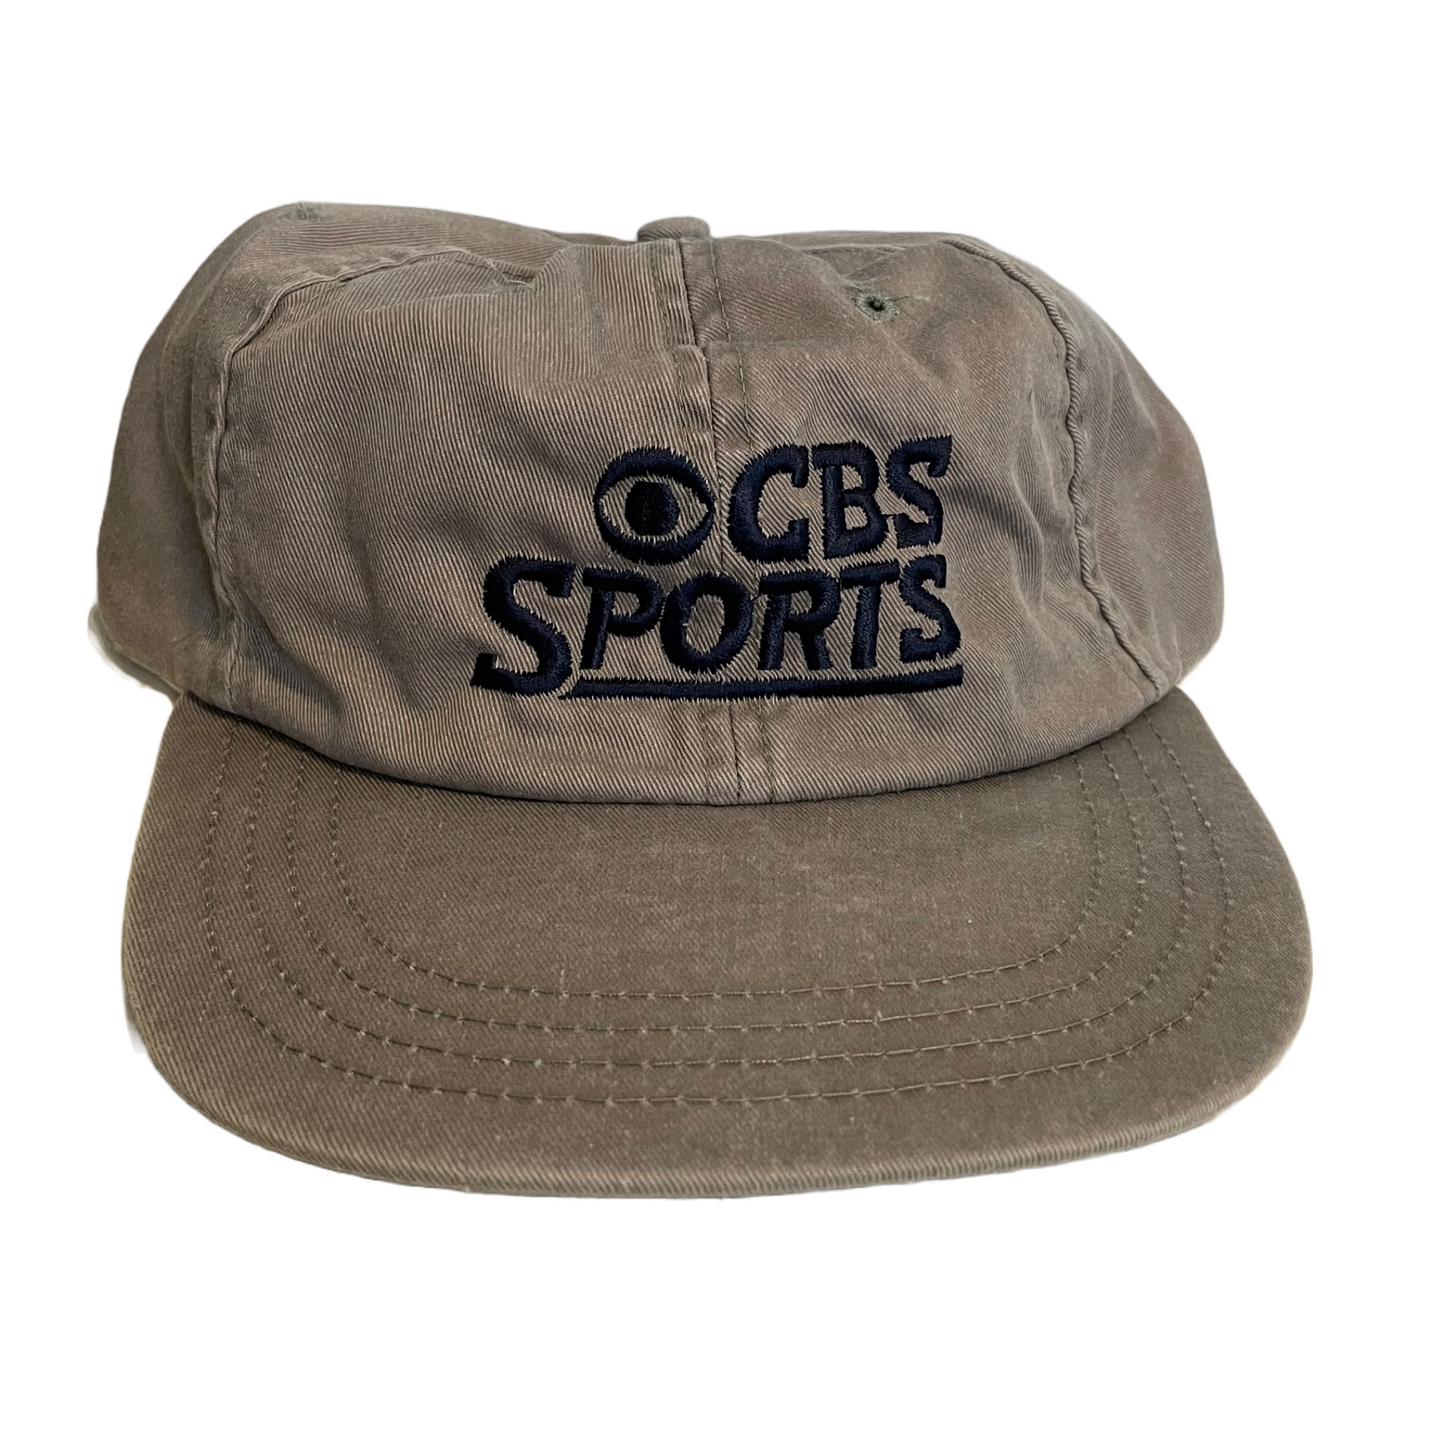 Vintage CBS Sports Snapback Hat Tan Earth Tones 90s